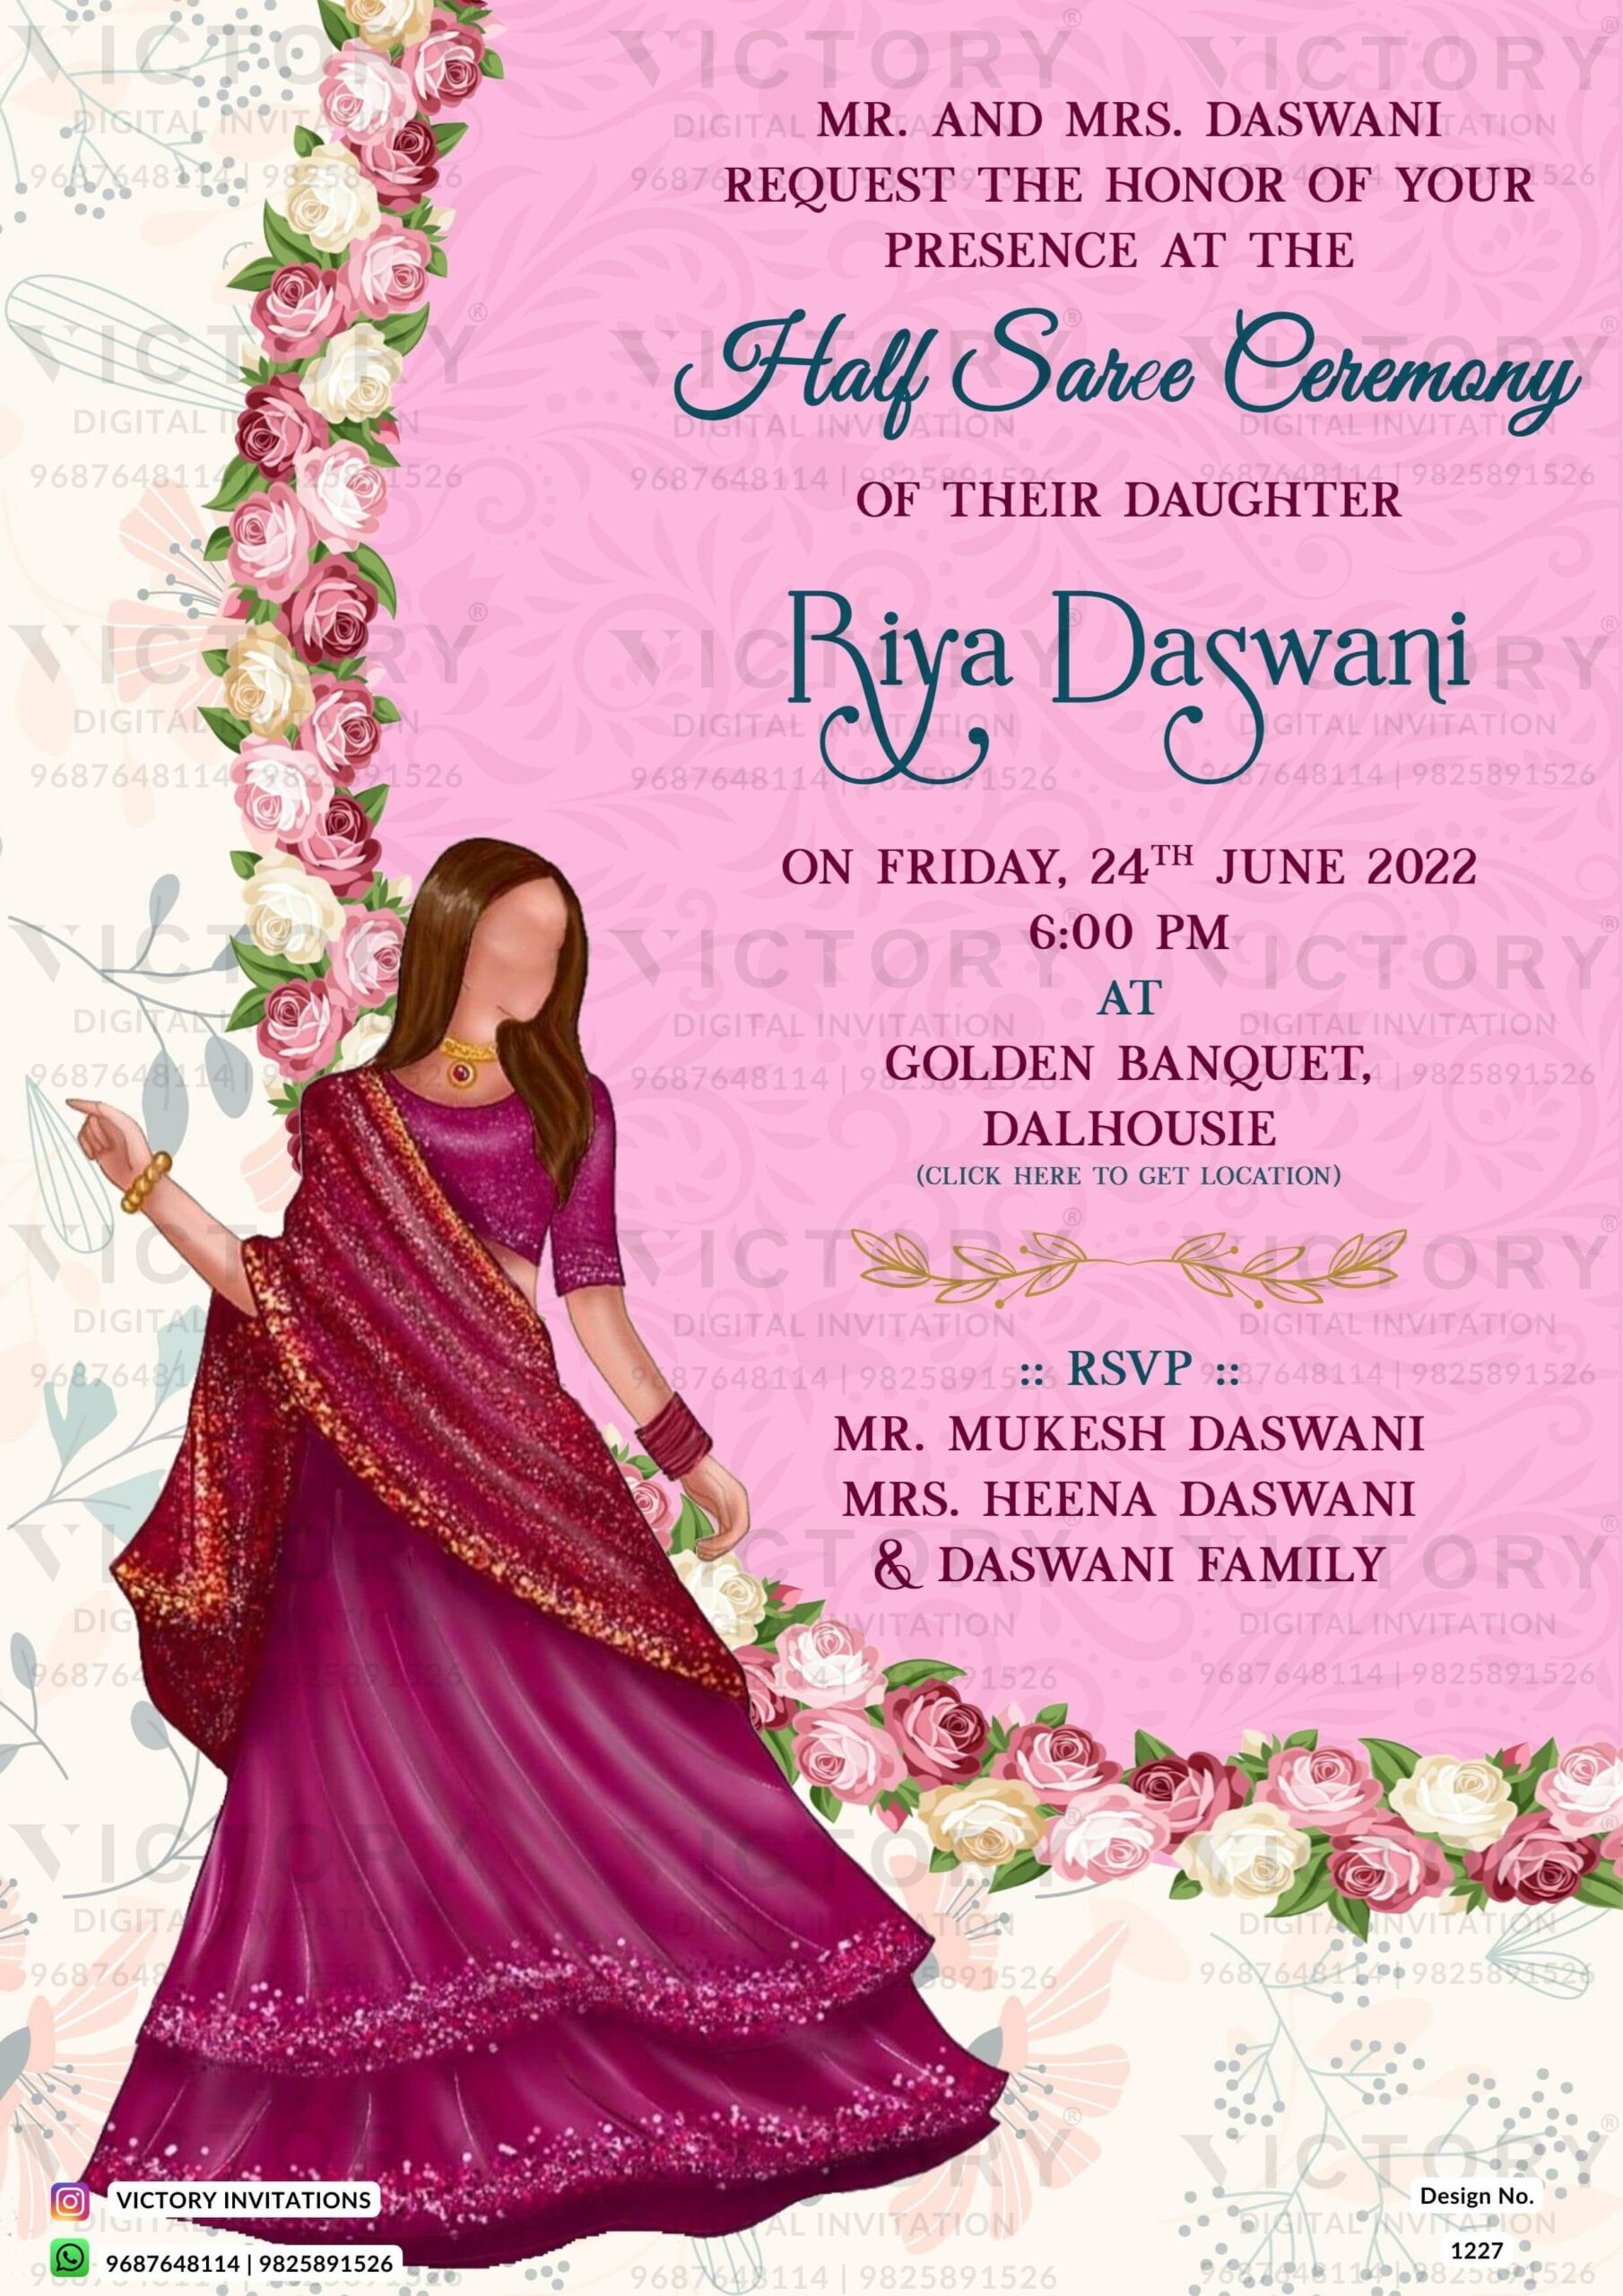 Half Saree Ceremony digital invitation card design no.1227